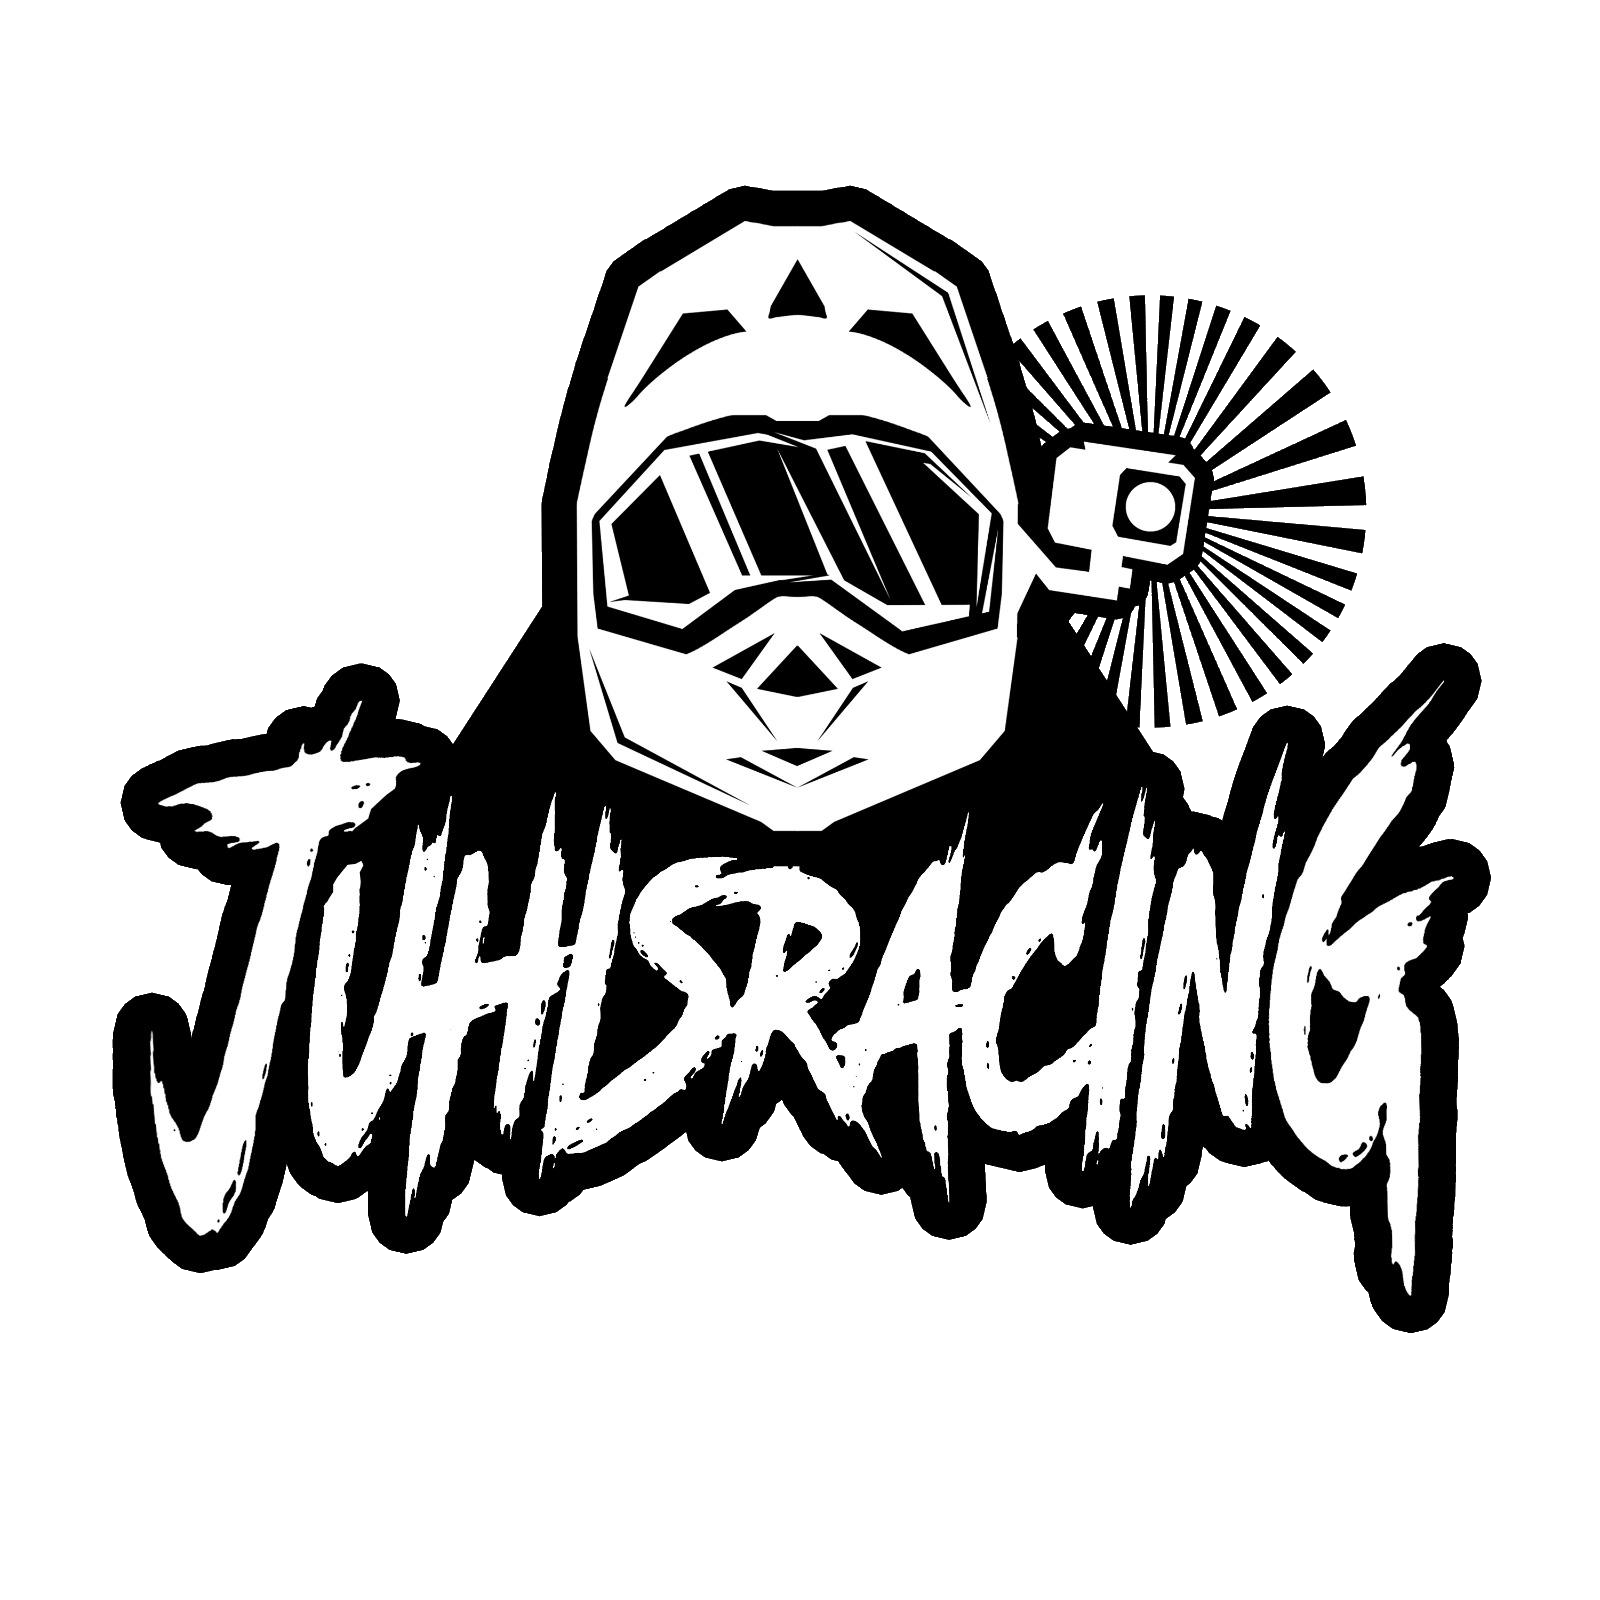 JuhisRacing -Tarra